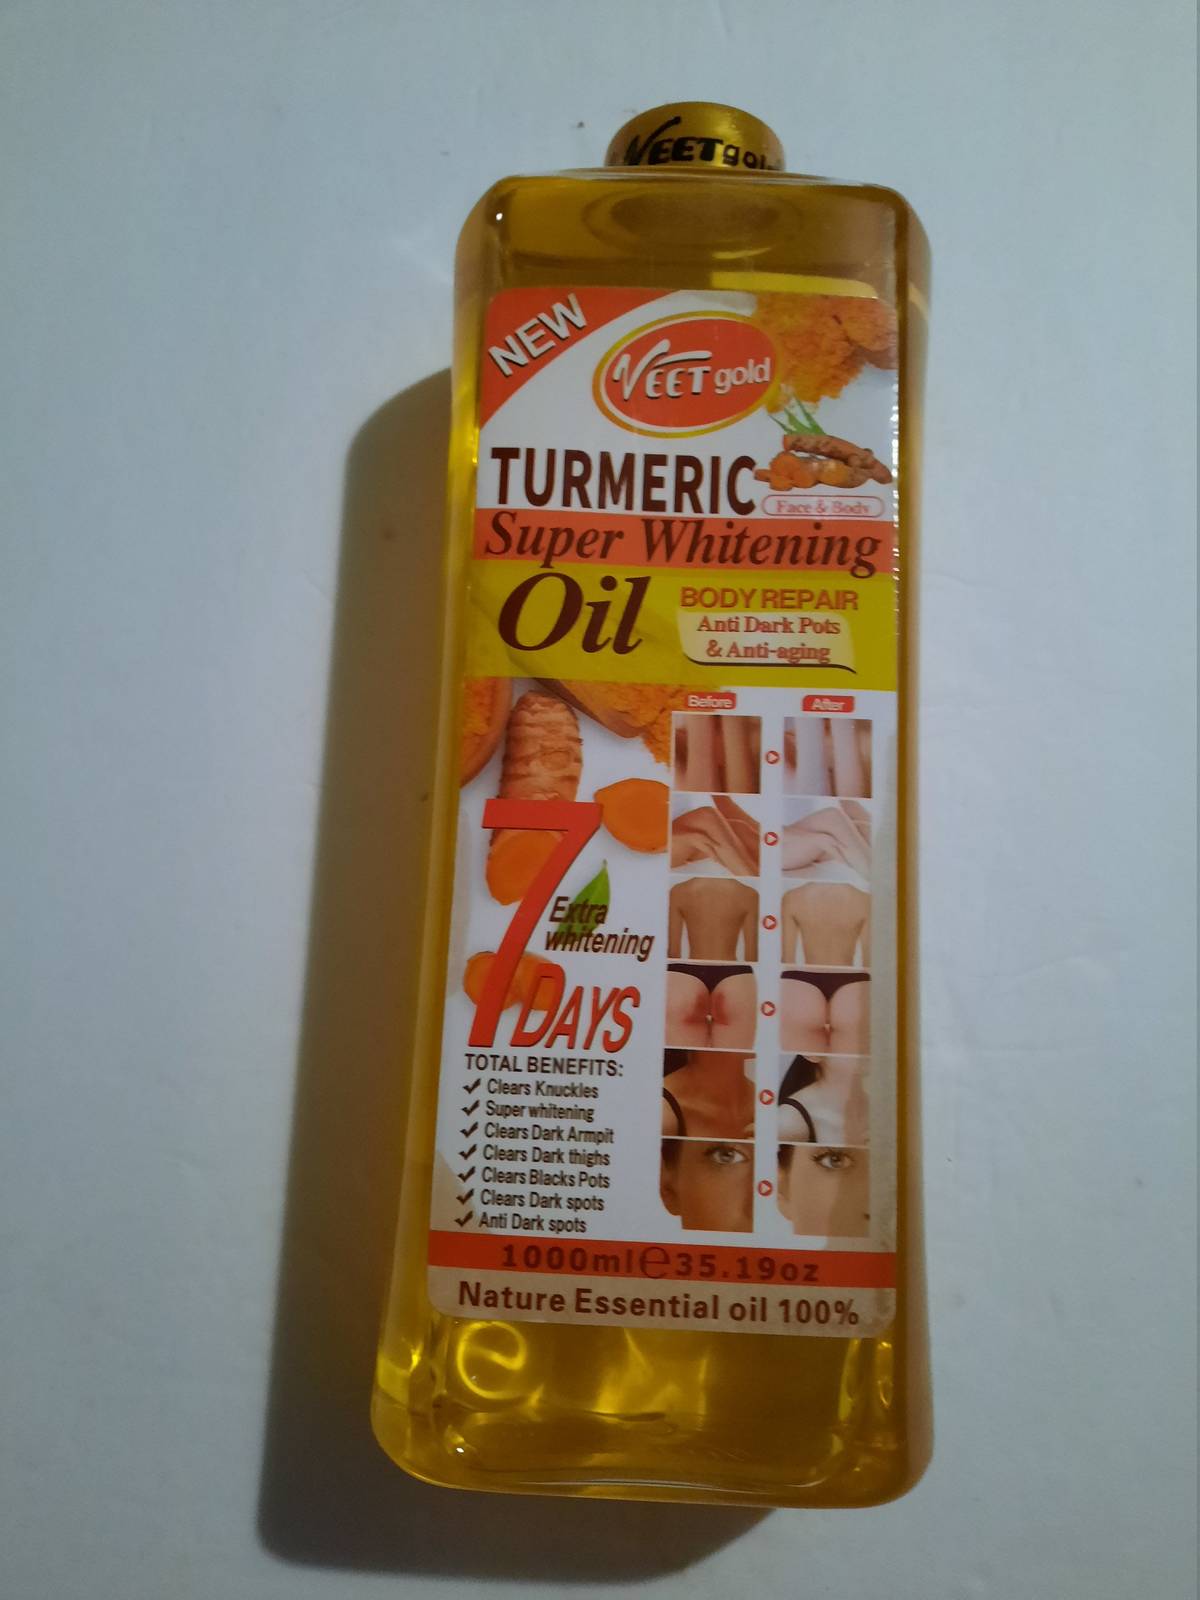 VEET GOLD Turmeric  face and body whitening/body repair Anti dark spots oil